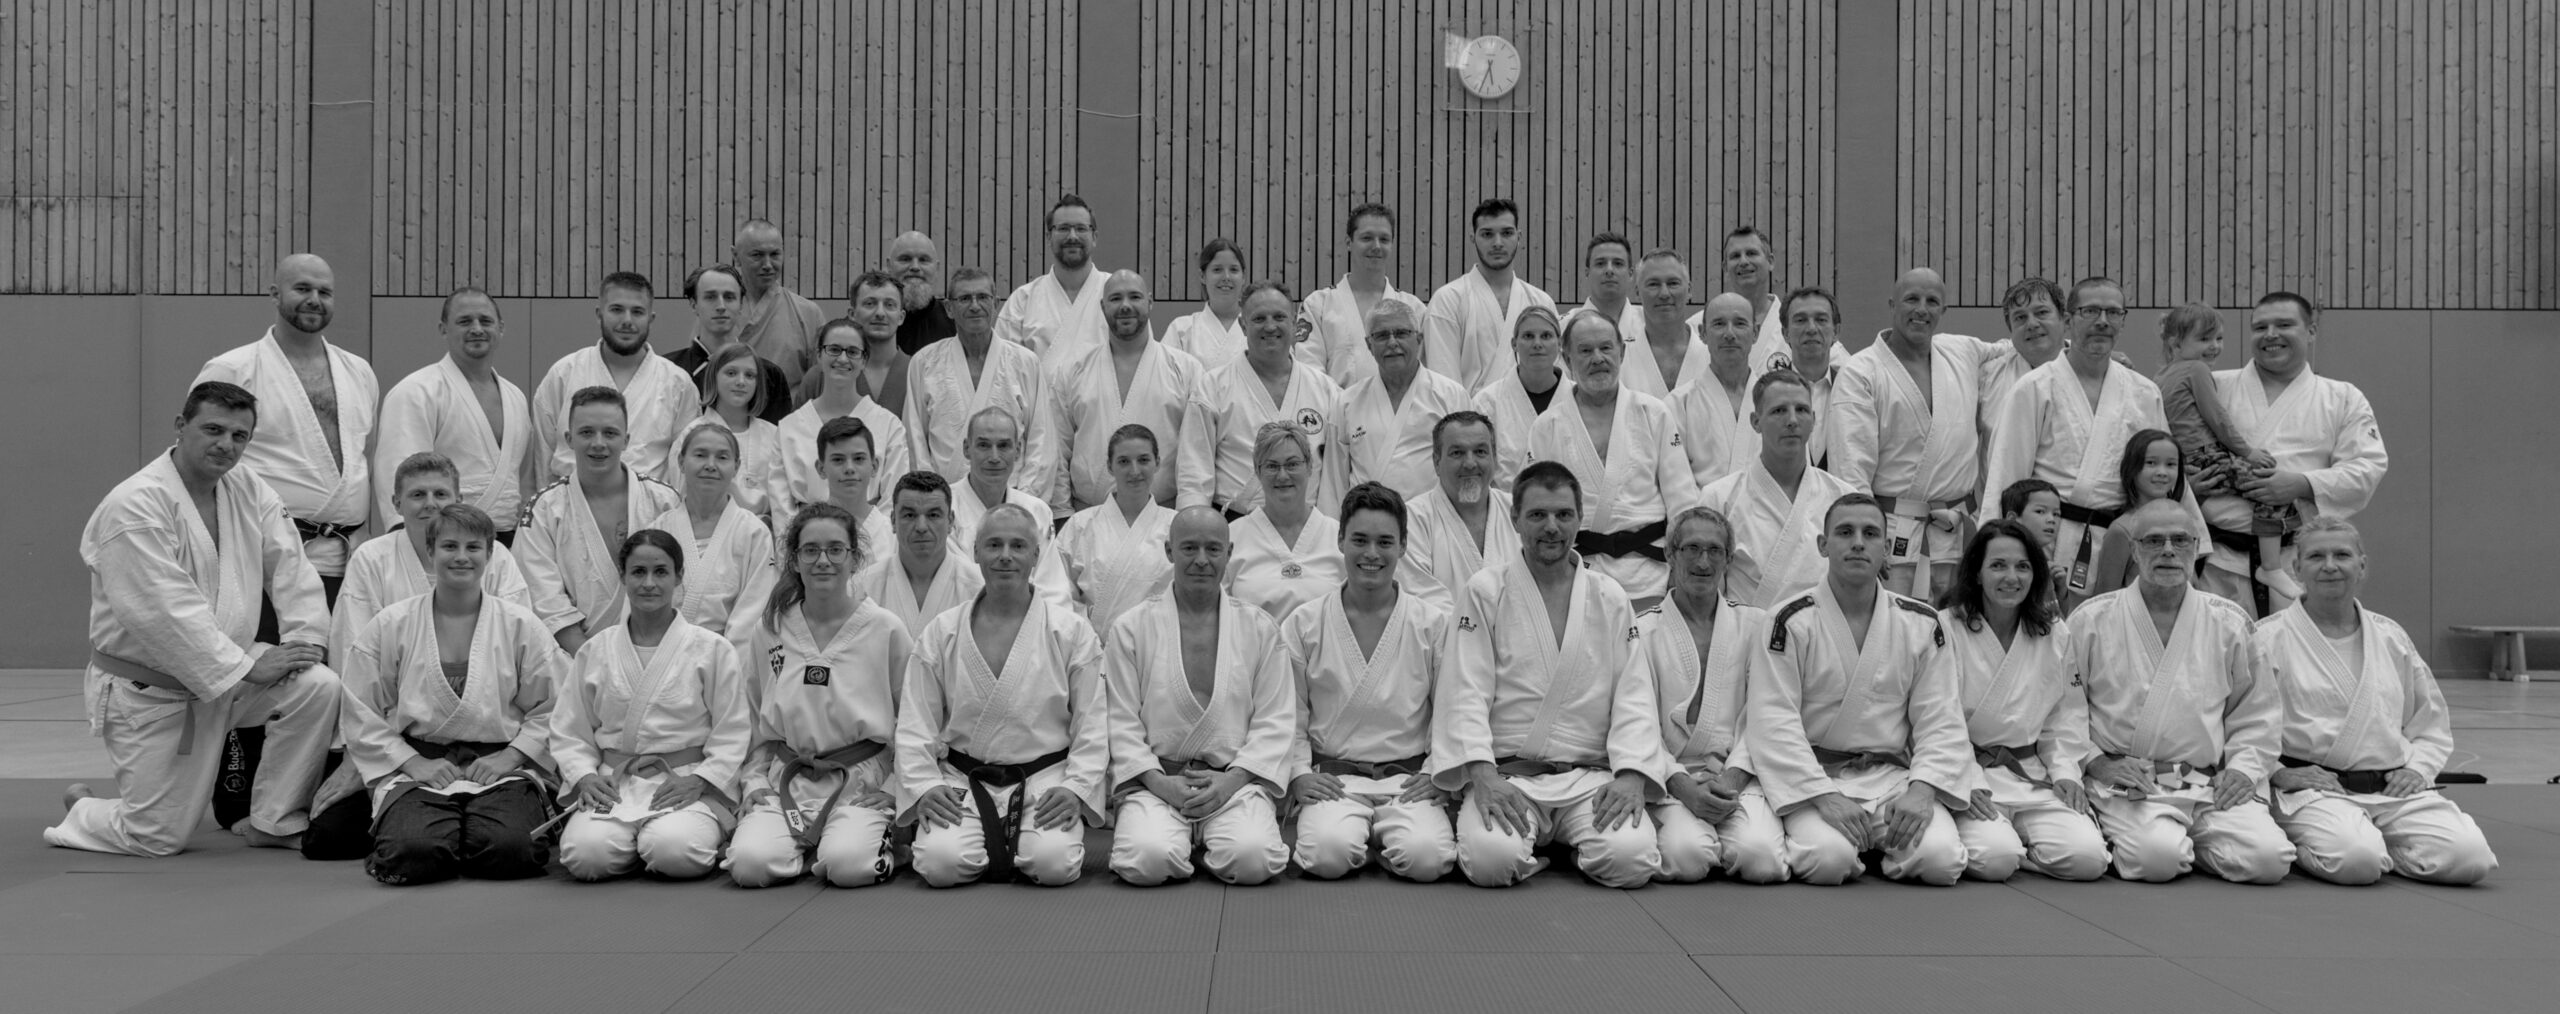 Gruppenbild vom 25. internationalen & verbandsoffenen Ju-Jitsu Lehrgang